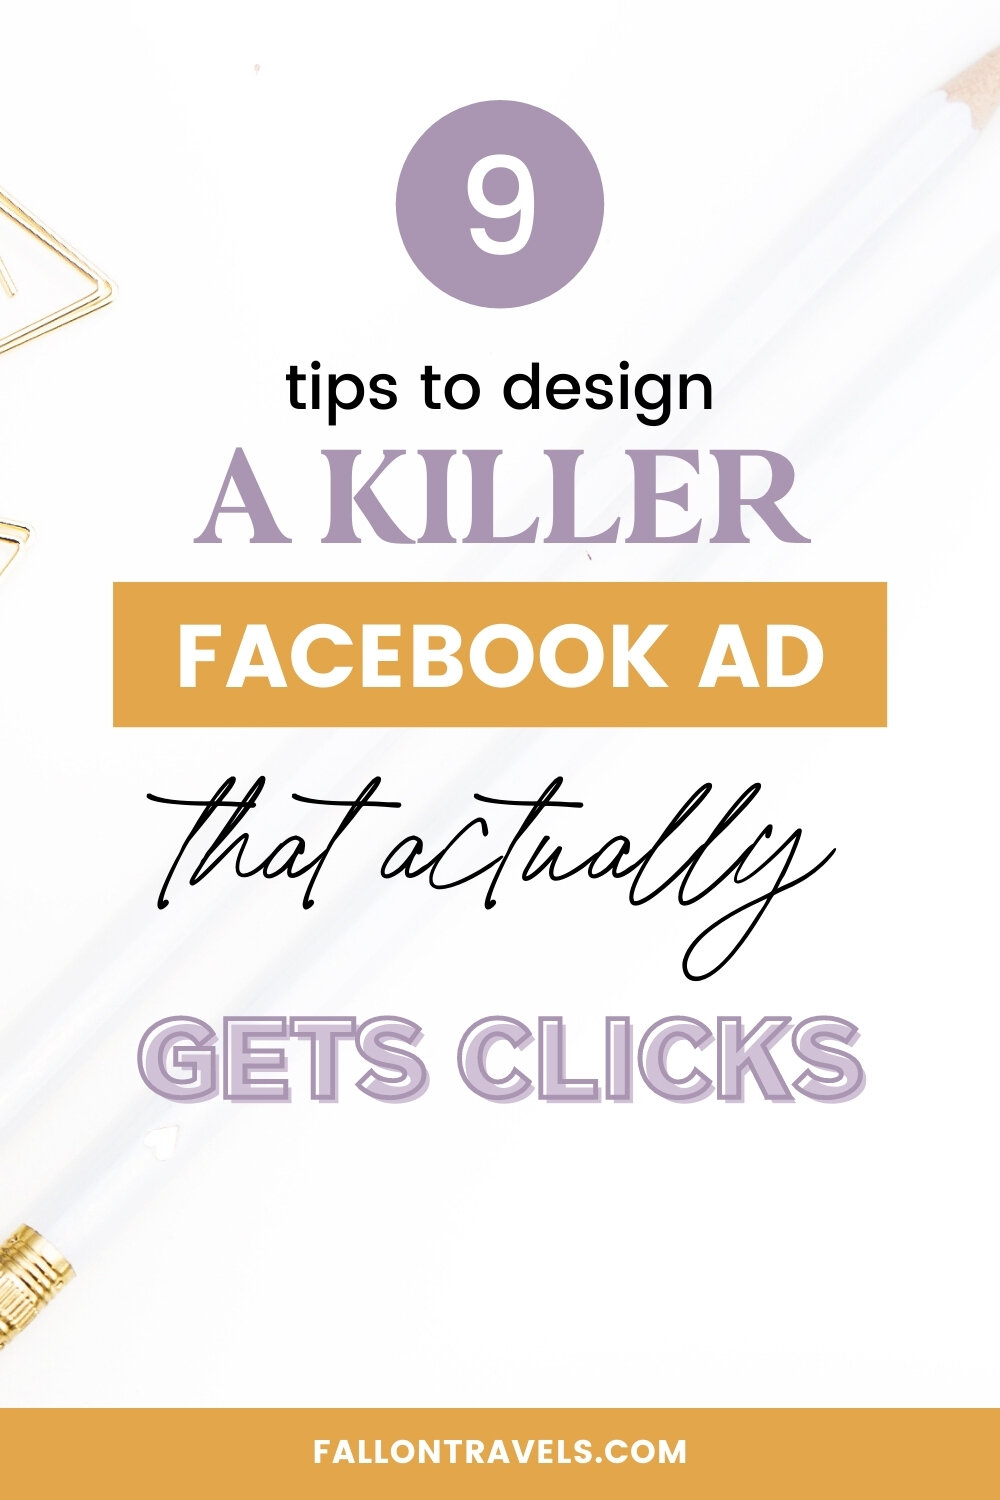 How to Design a Facebook Ad